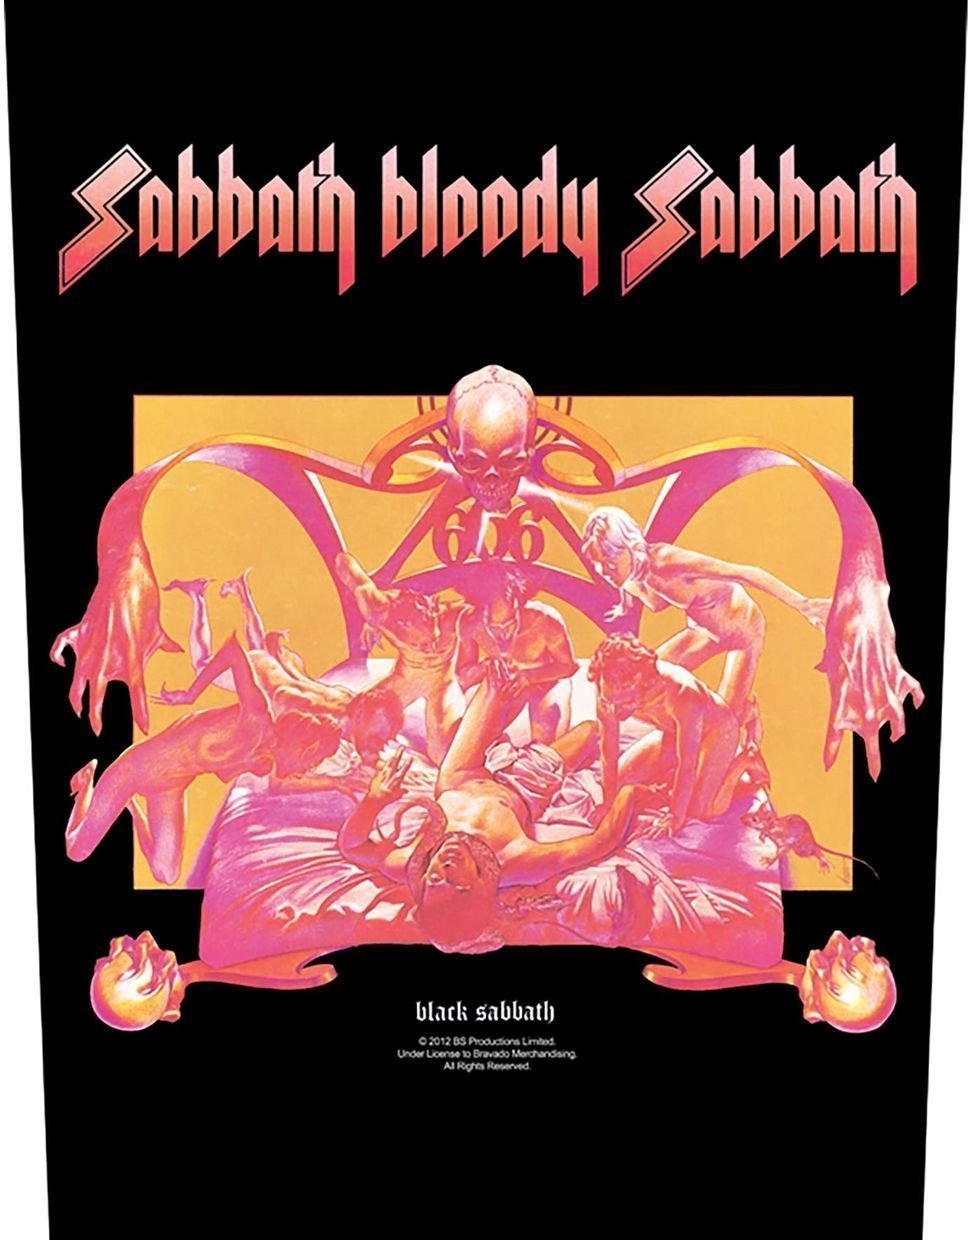 Patch Black Sabbath Sabbath Bloody Sabbath Patch